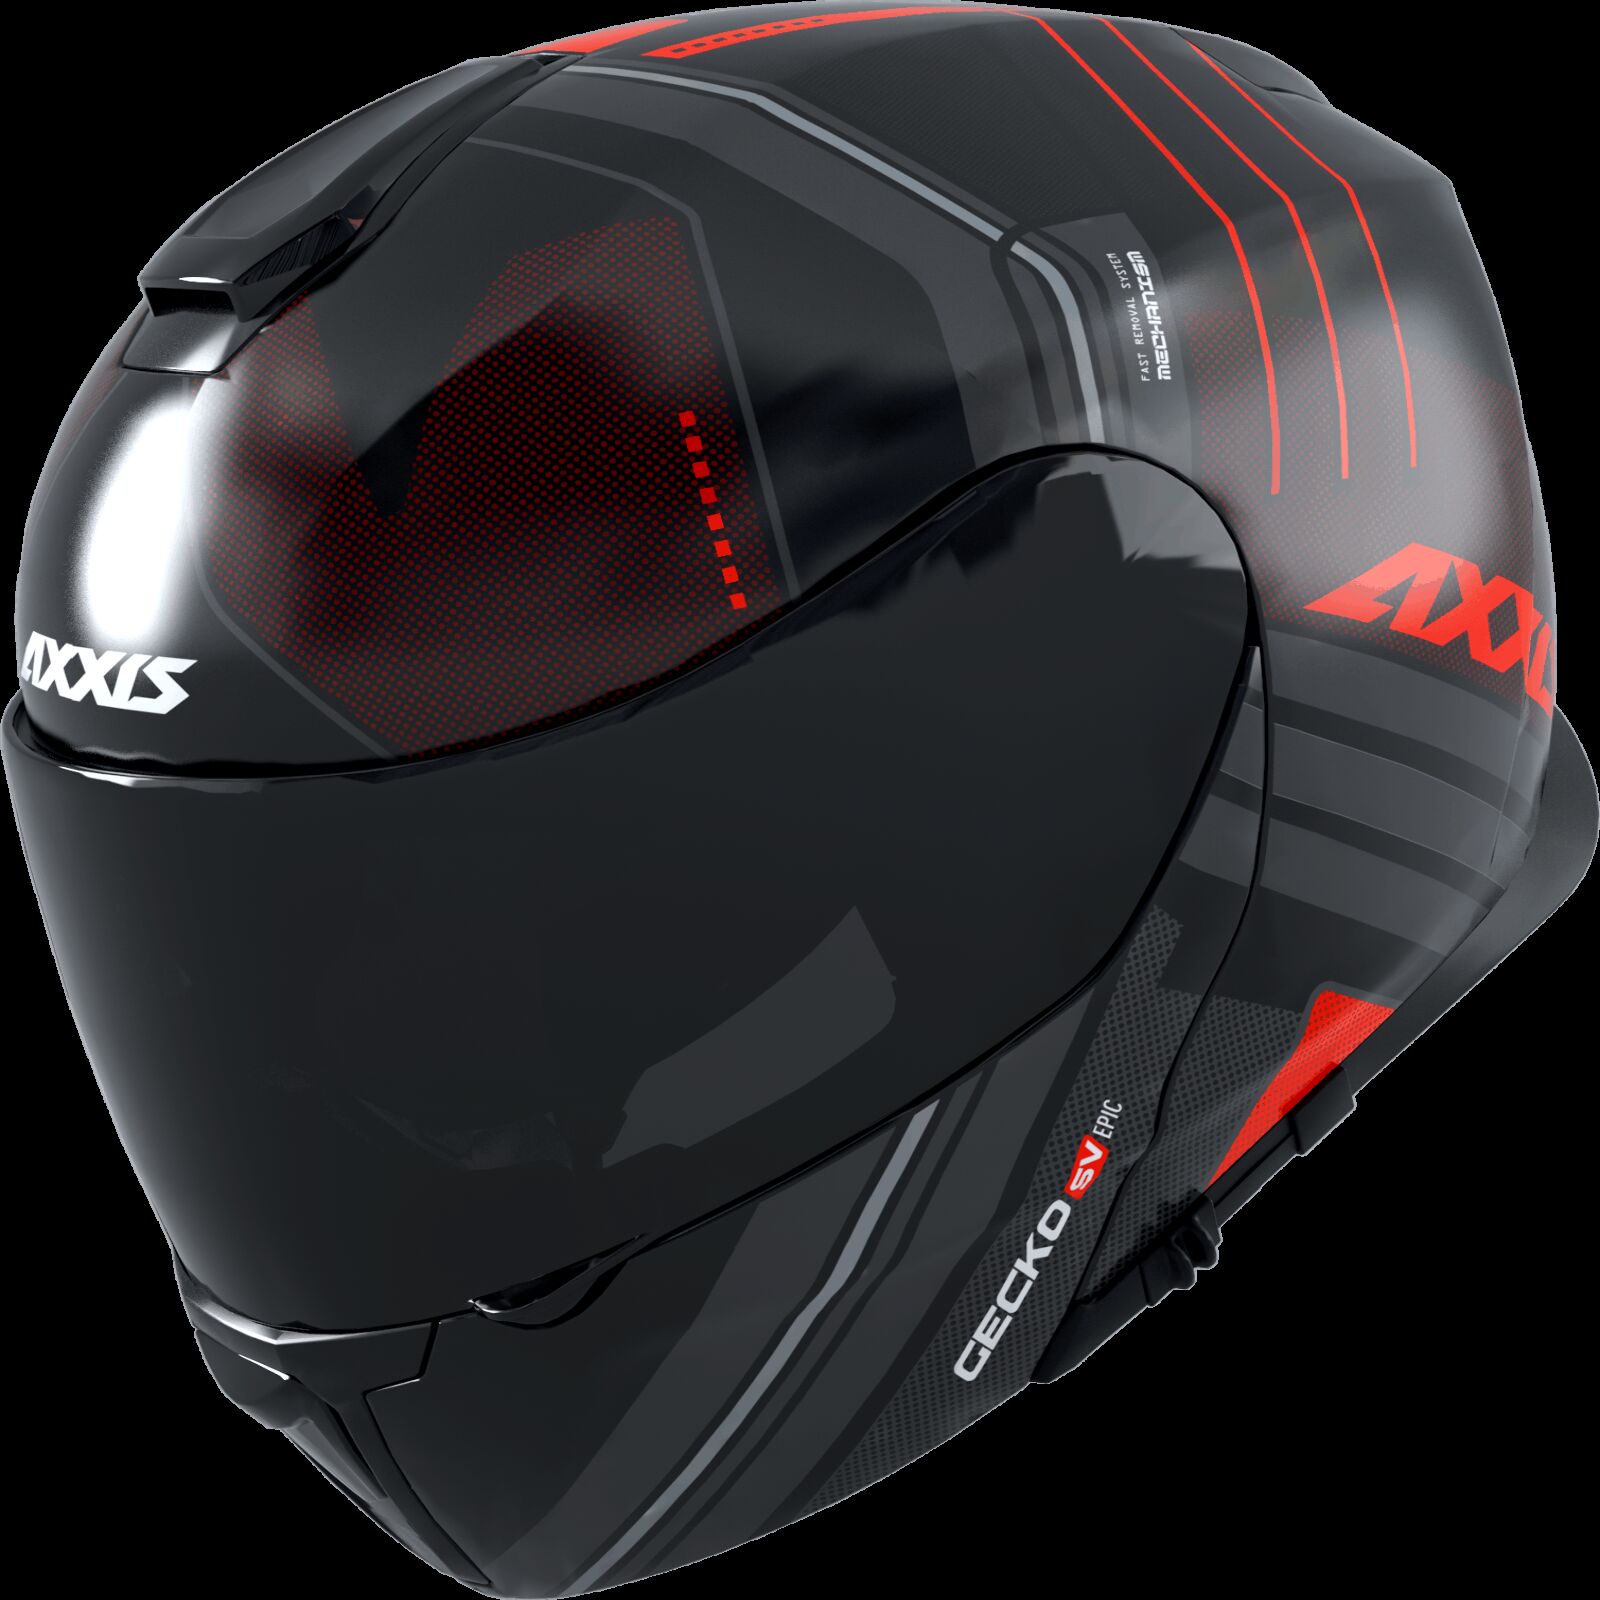 Obrázek produktu Výklopná helma AXXIS GECKO SV ABS epic b5 matná fluor červená S 42627311534